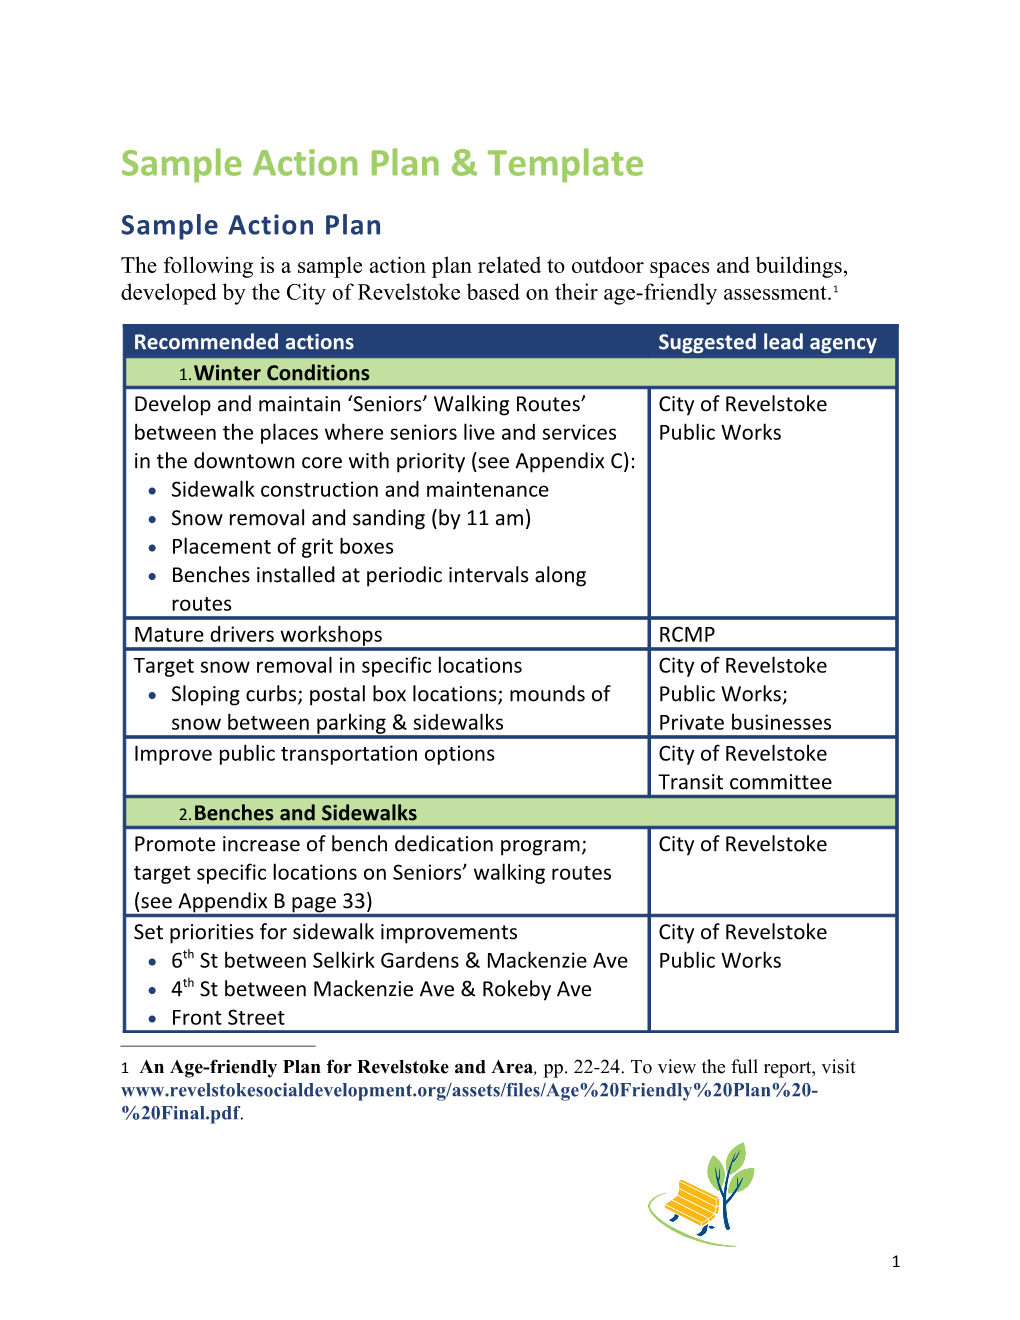 Sample Action Plan & Template Sample Action Plan